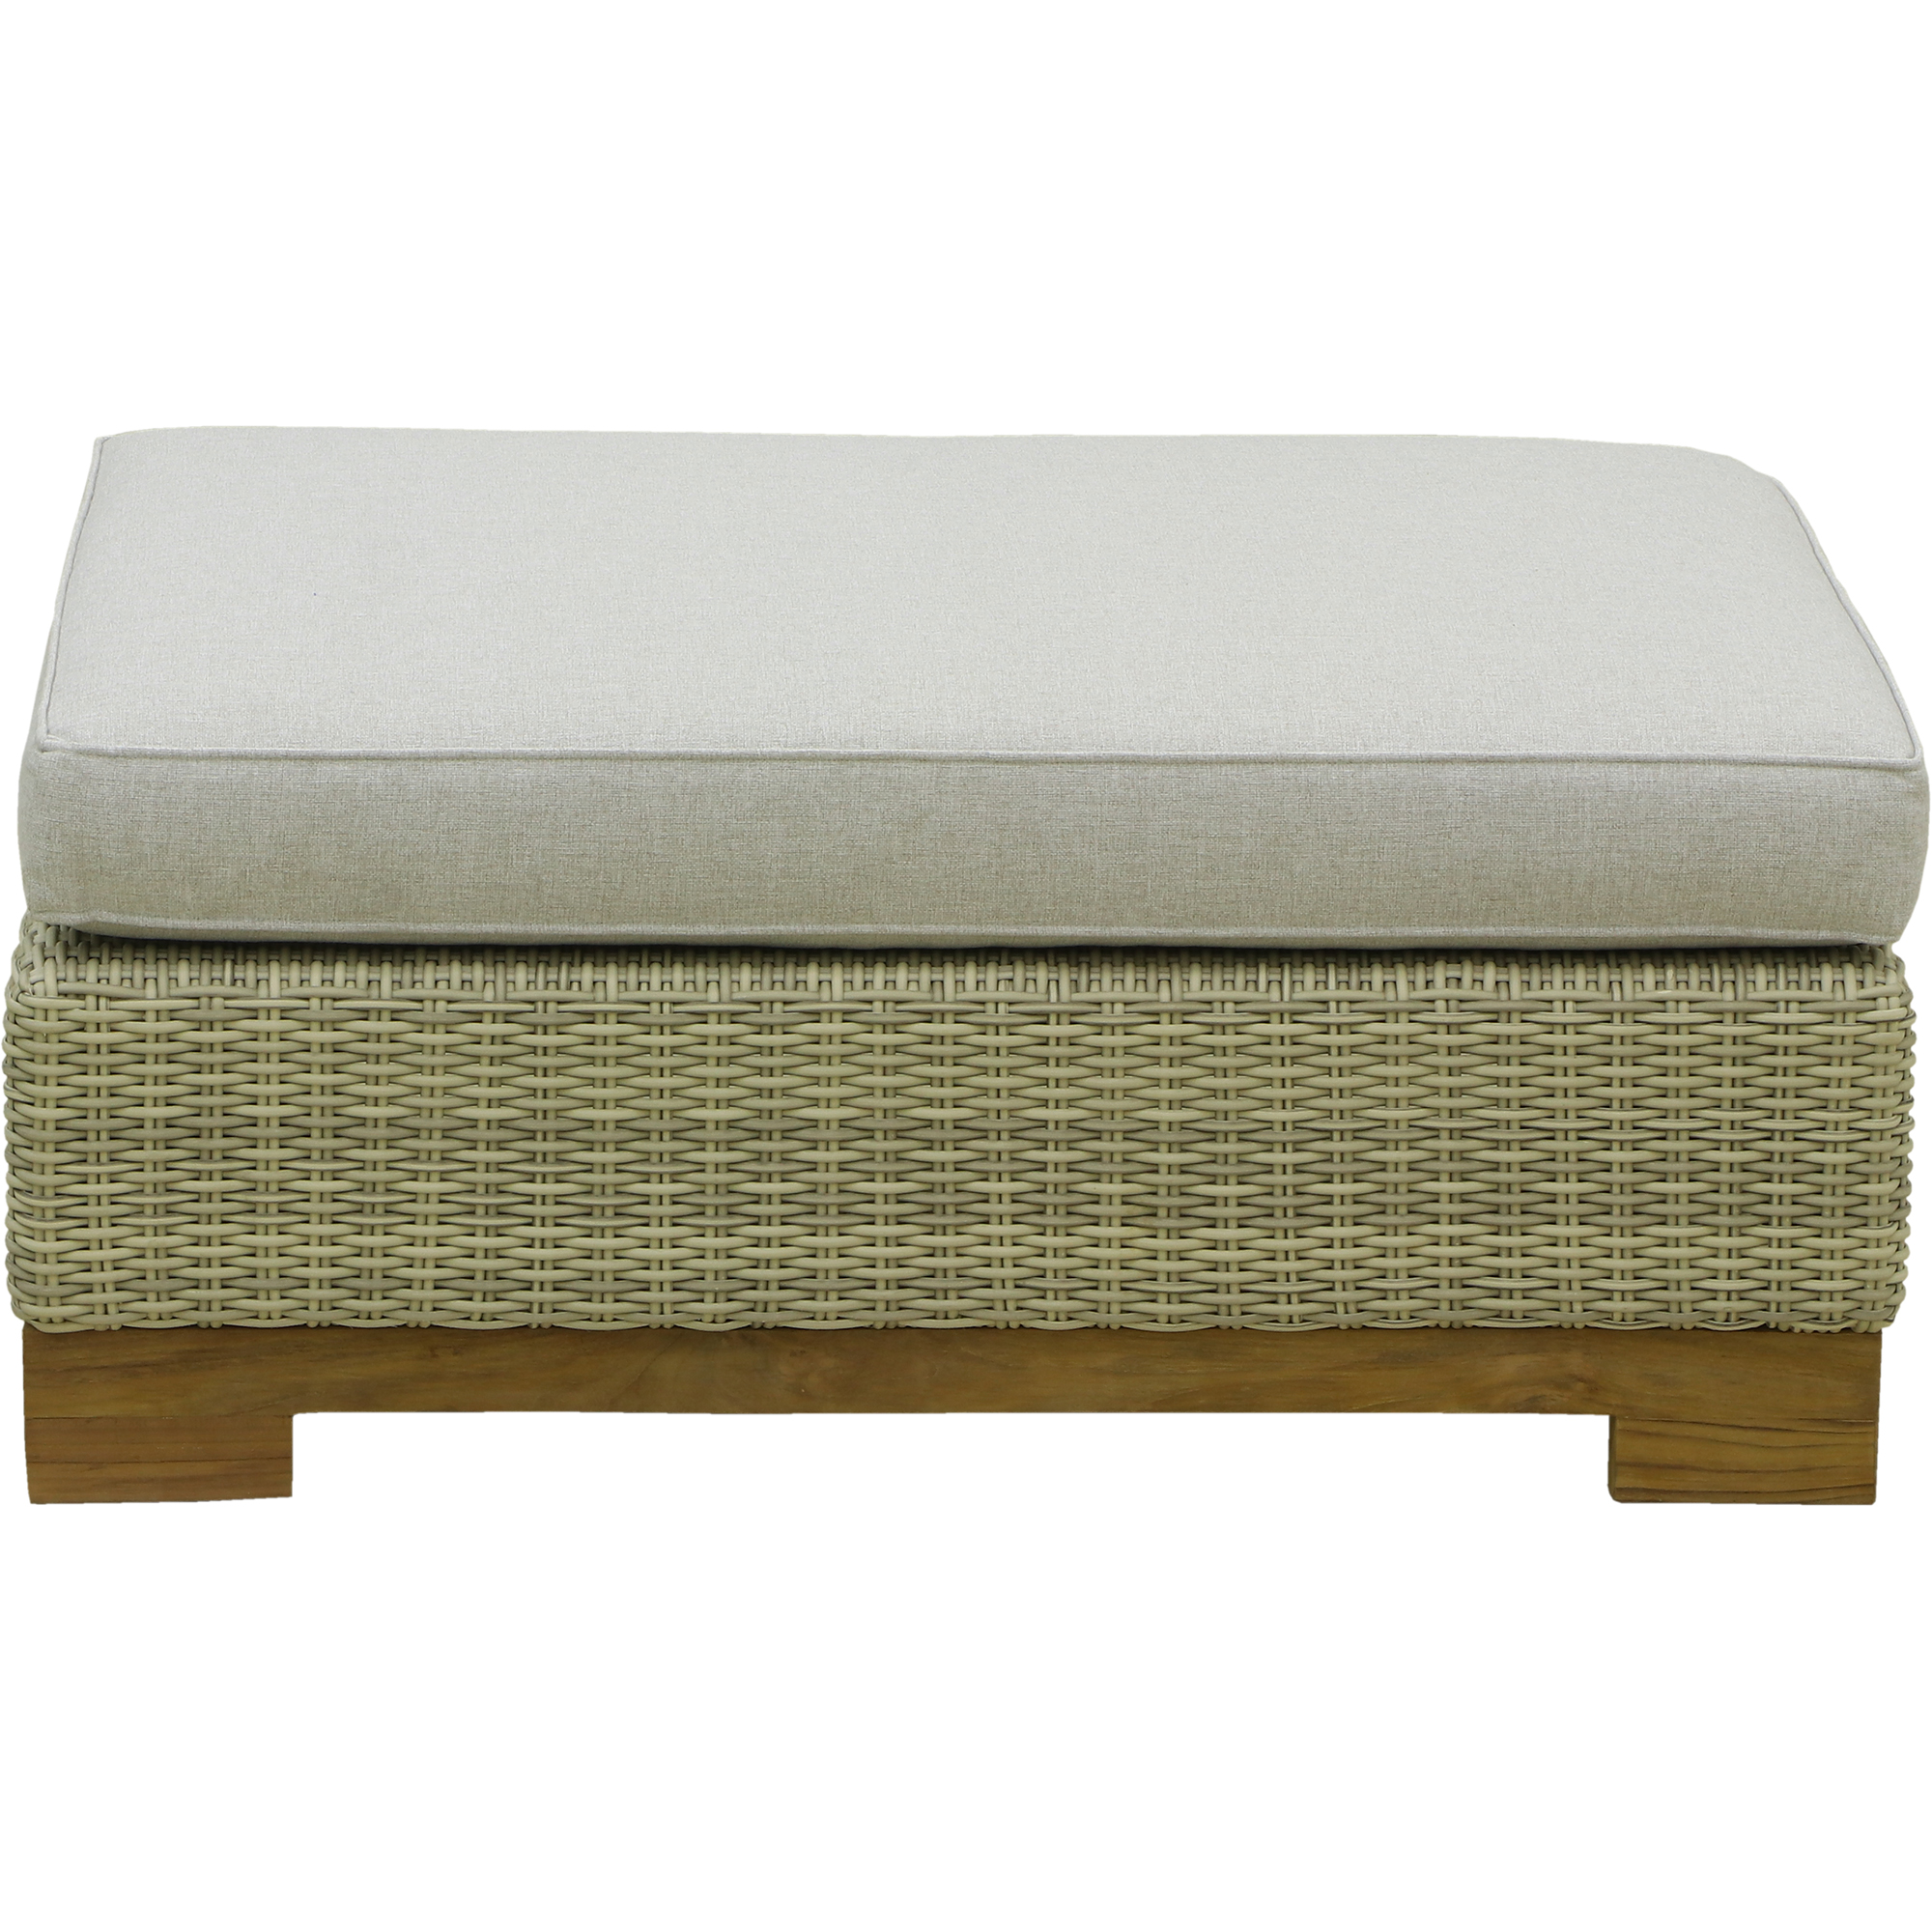 Комплект мебели с подушками Jepara 2 предмета, цвет светло-коричневый, размер 240х90х88 см - фото 4